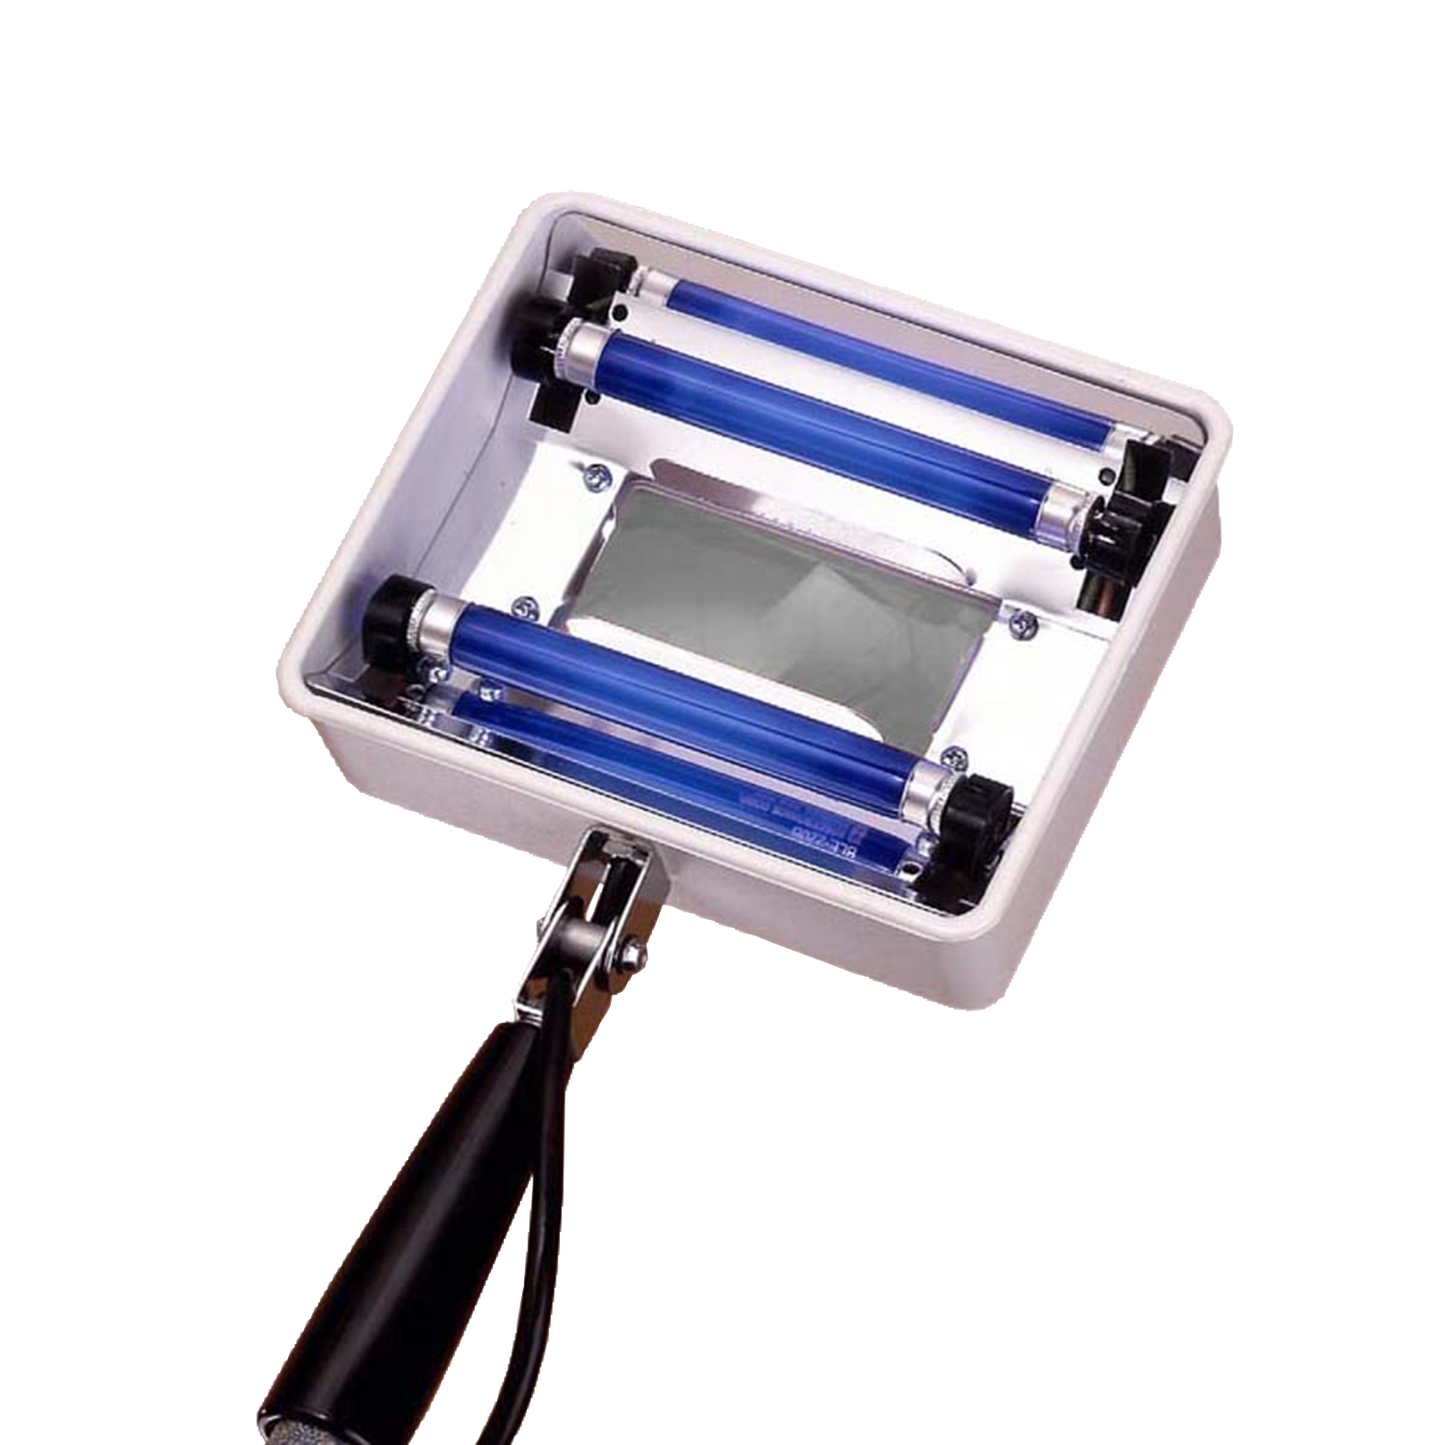 SE - Magnifier - Handheld, 2-in-1 UV/LED, 4 LED, 1 UV - MB606-2XUV